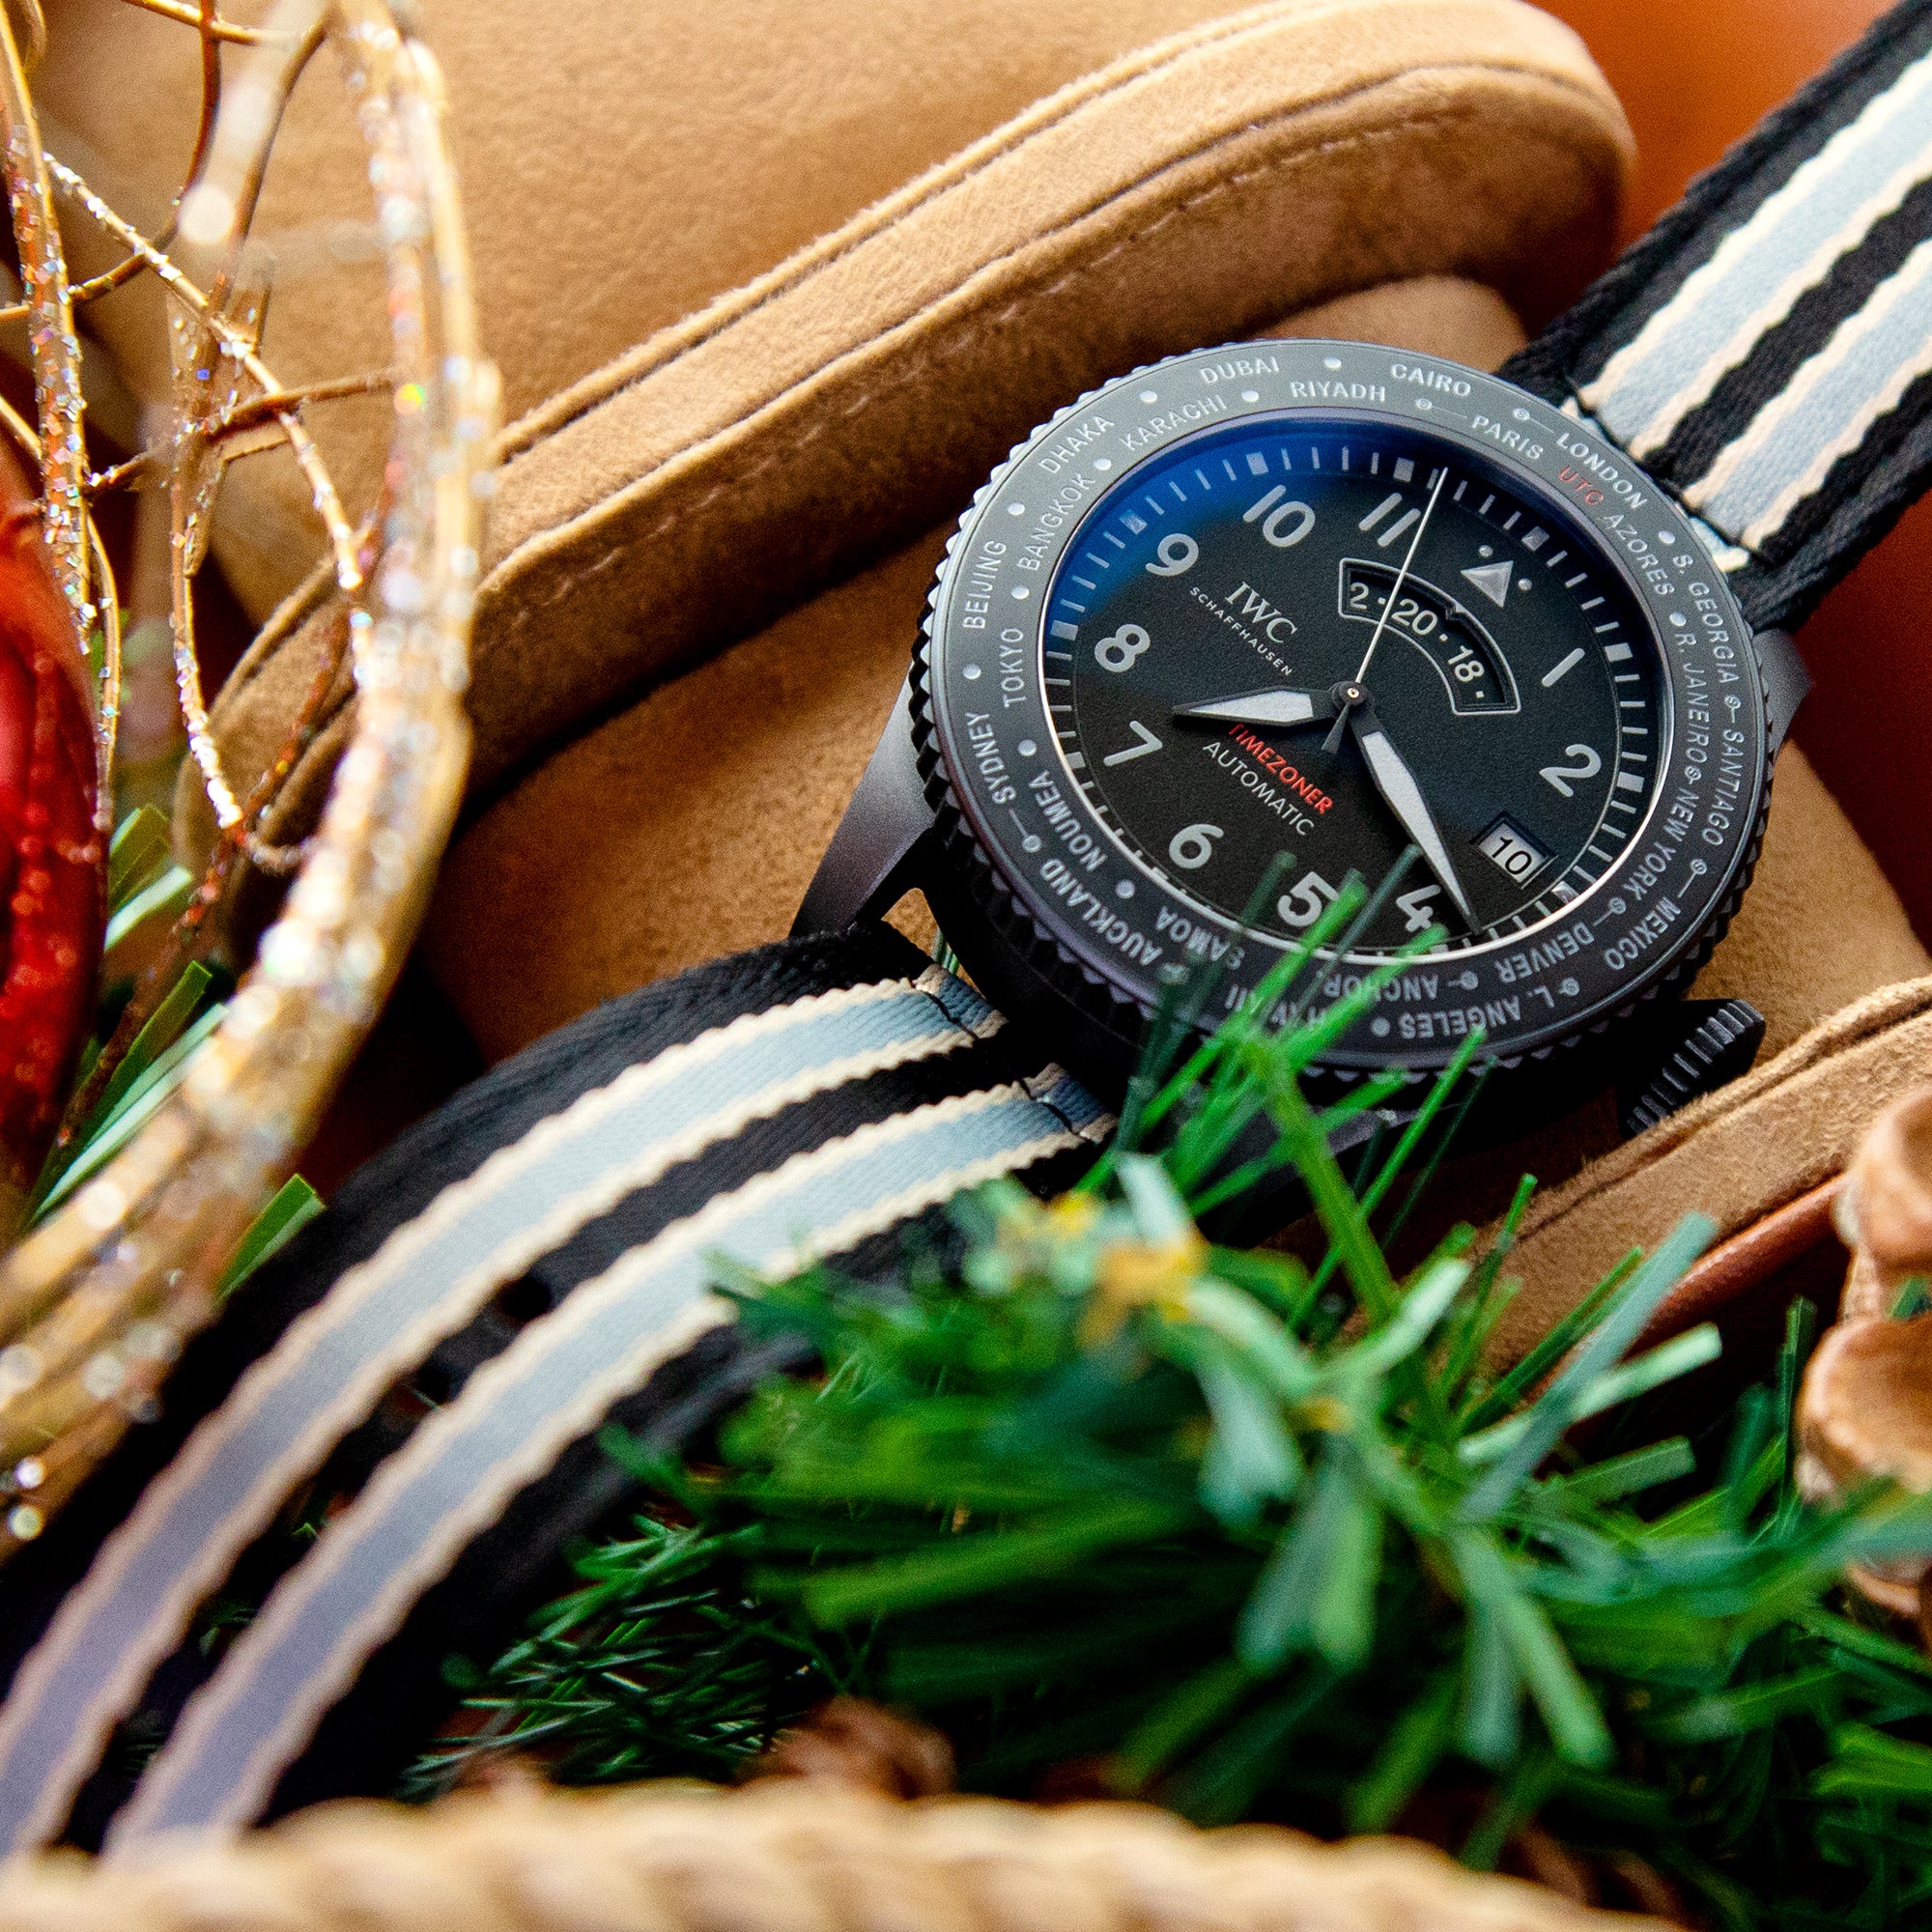 22mm 2-pcs Seatbelt Nylon Watch Band, Black, Grey and Khaki Stripes, Brushed Buckle Strapcode Watch Bands